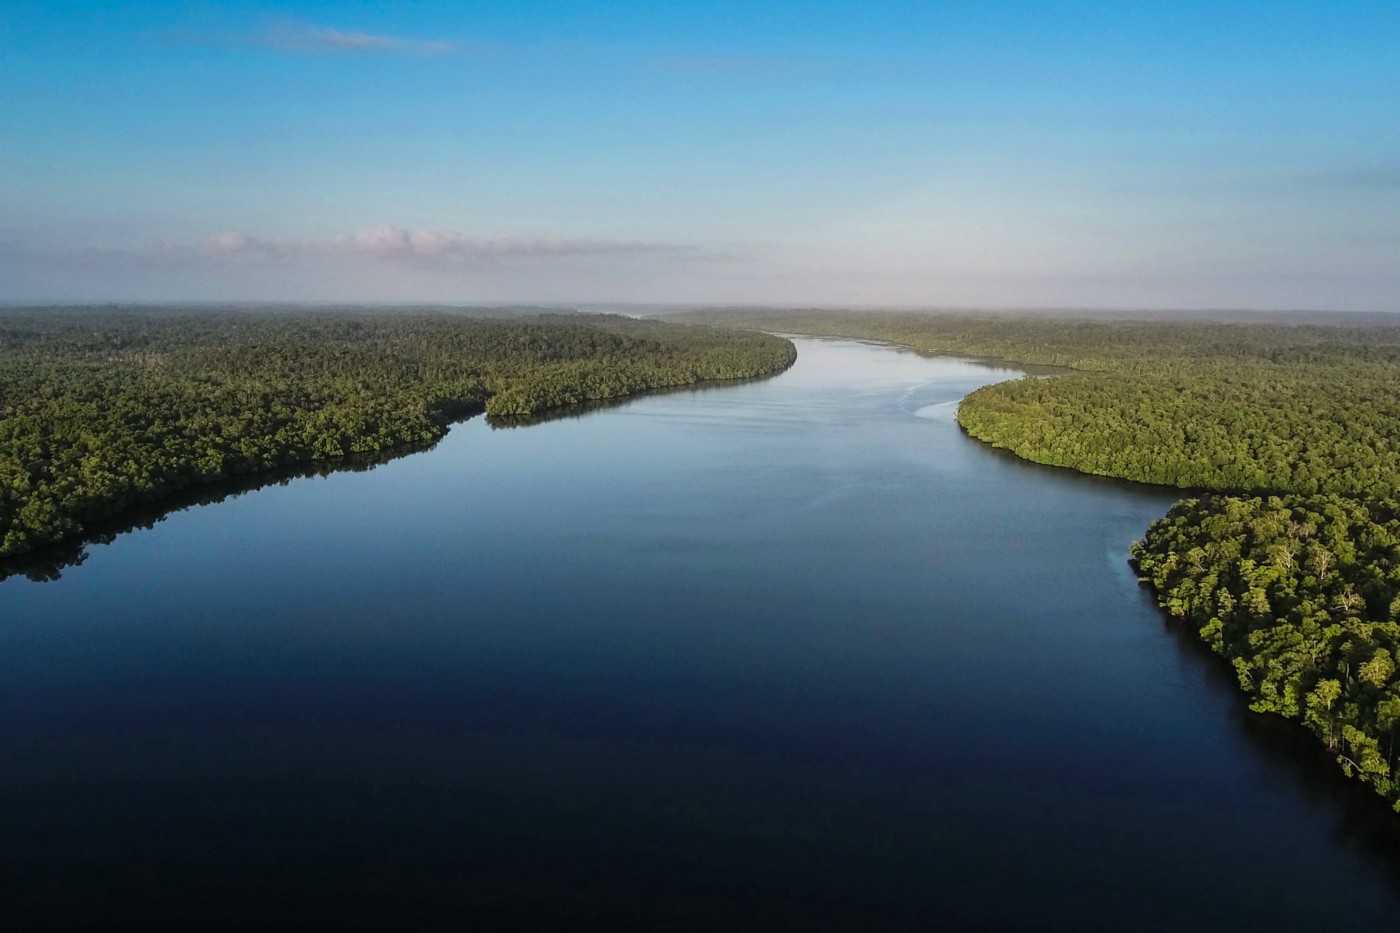 Tanpa hutan mangrove, — sebagian besar masuk ke dalam kawasan konsesi milik Menara Group — maka kawasan pesisir maupun pantai Aru akan sirnah. Foto oleh Forest Watch Indonesia.